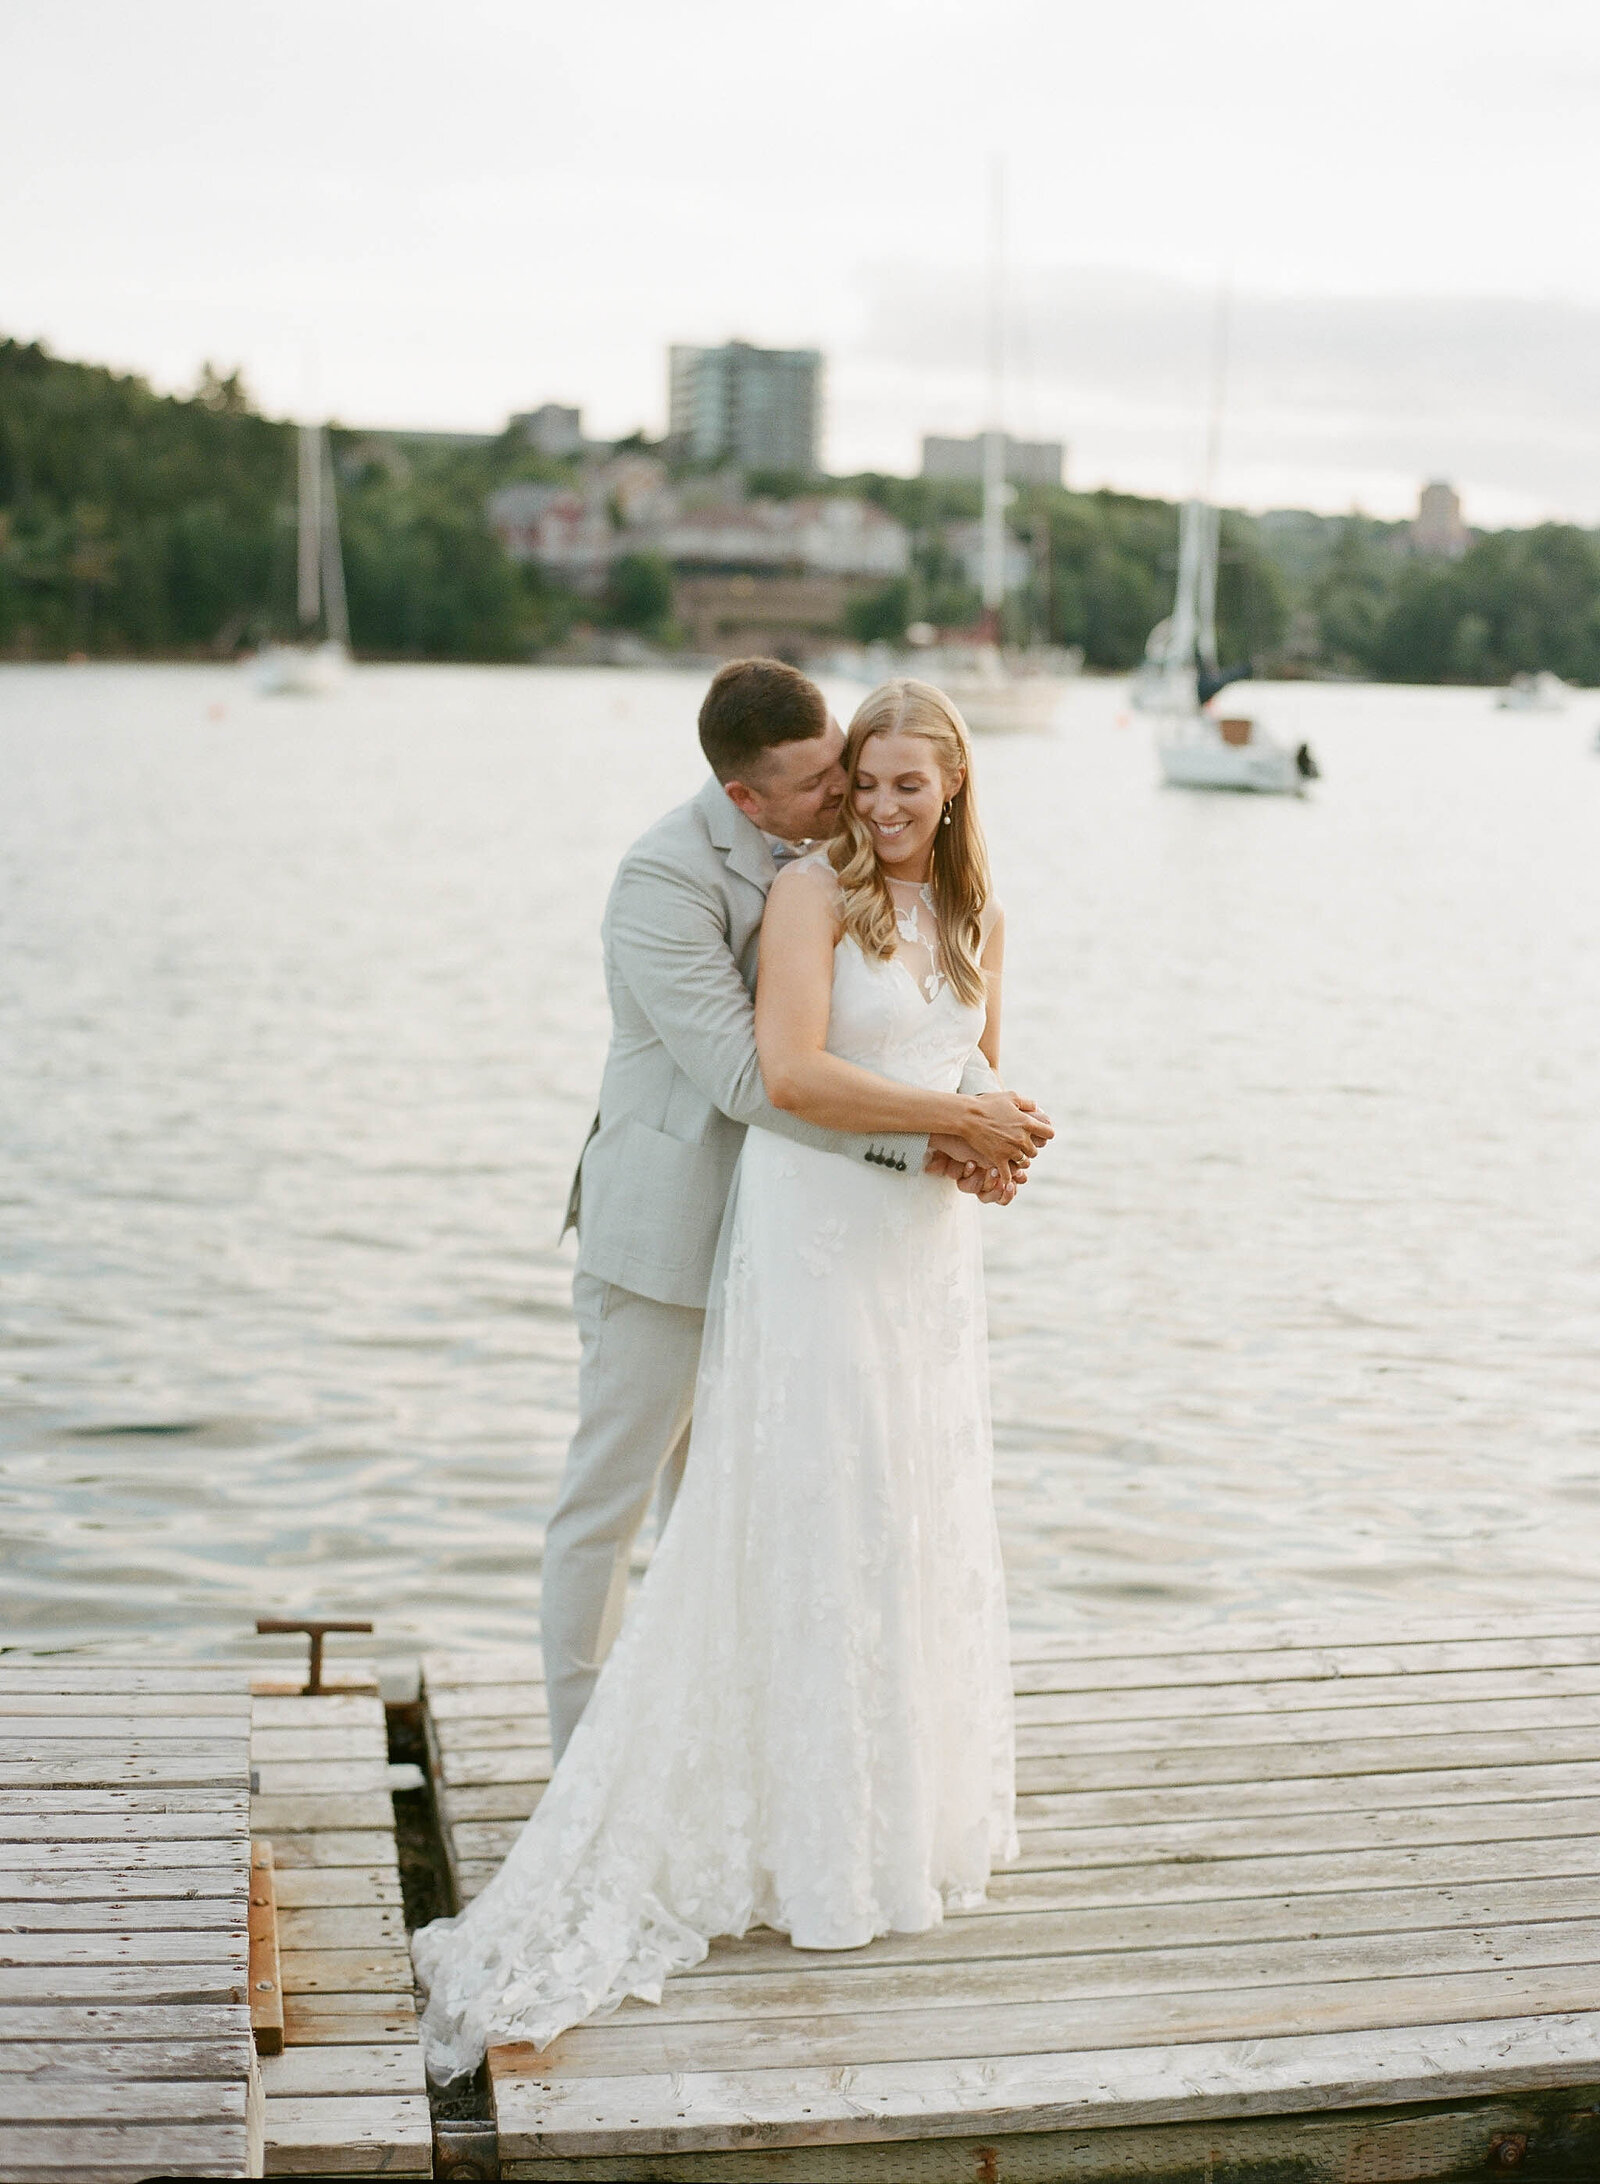 Jacqueline Anne Photography - Halifax Wedding Photographer - Ocean Elopement